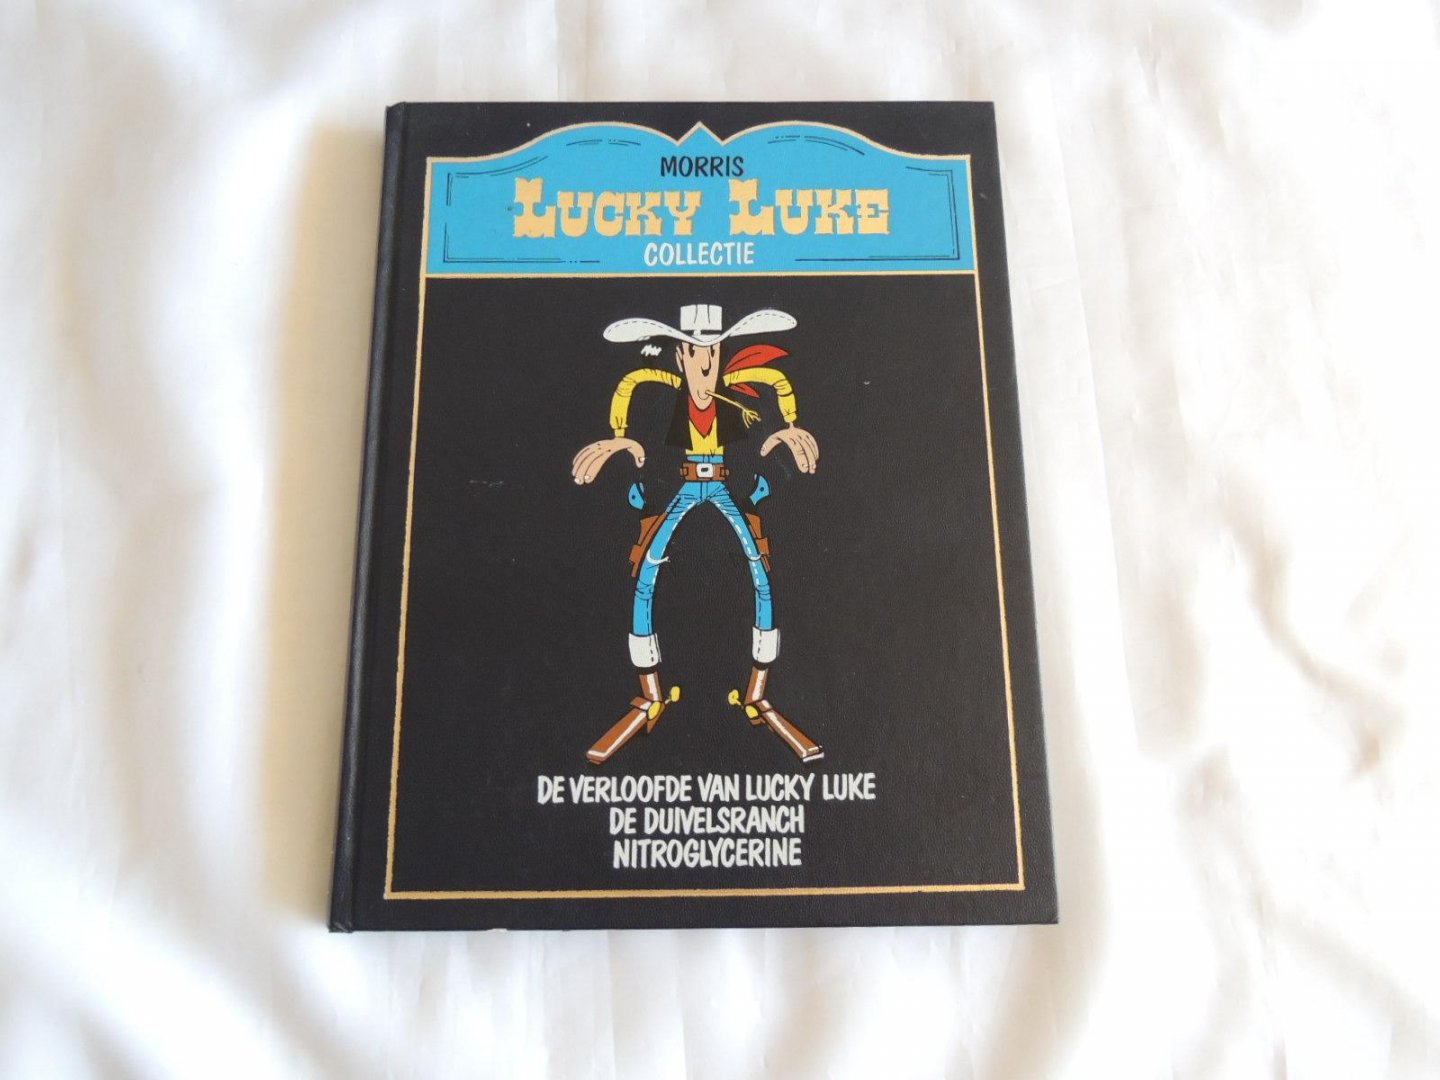 Morris - Vidal, Guy - Lucky Luke Collectie: De verloofde van Lucky Luke / De duivelsranch / Nitroglycerine